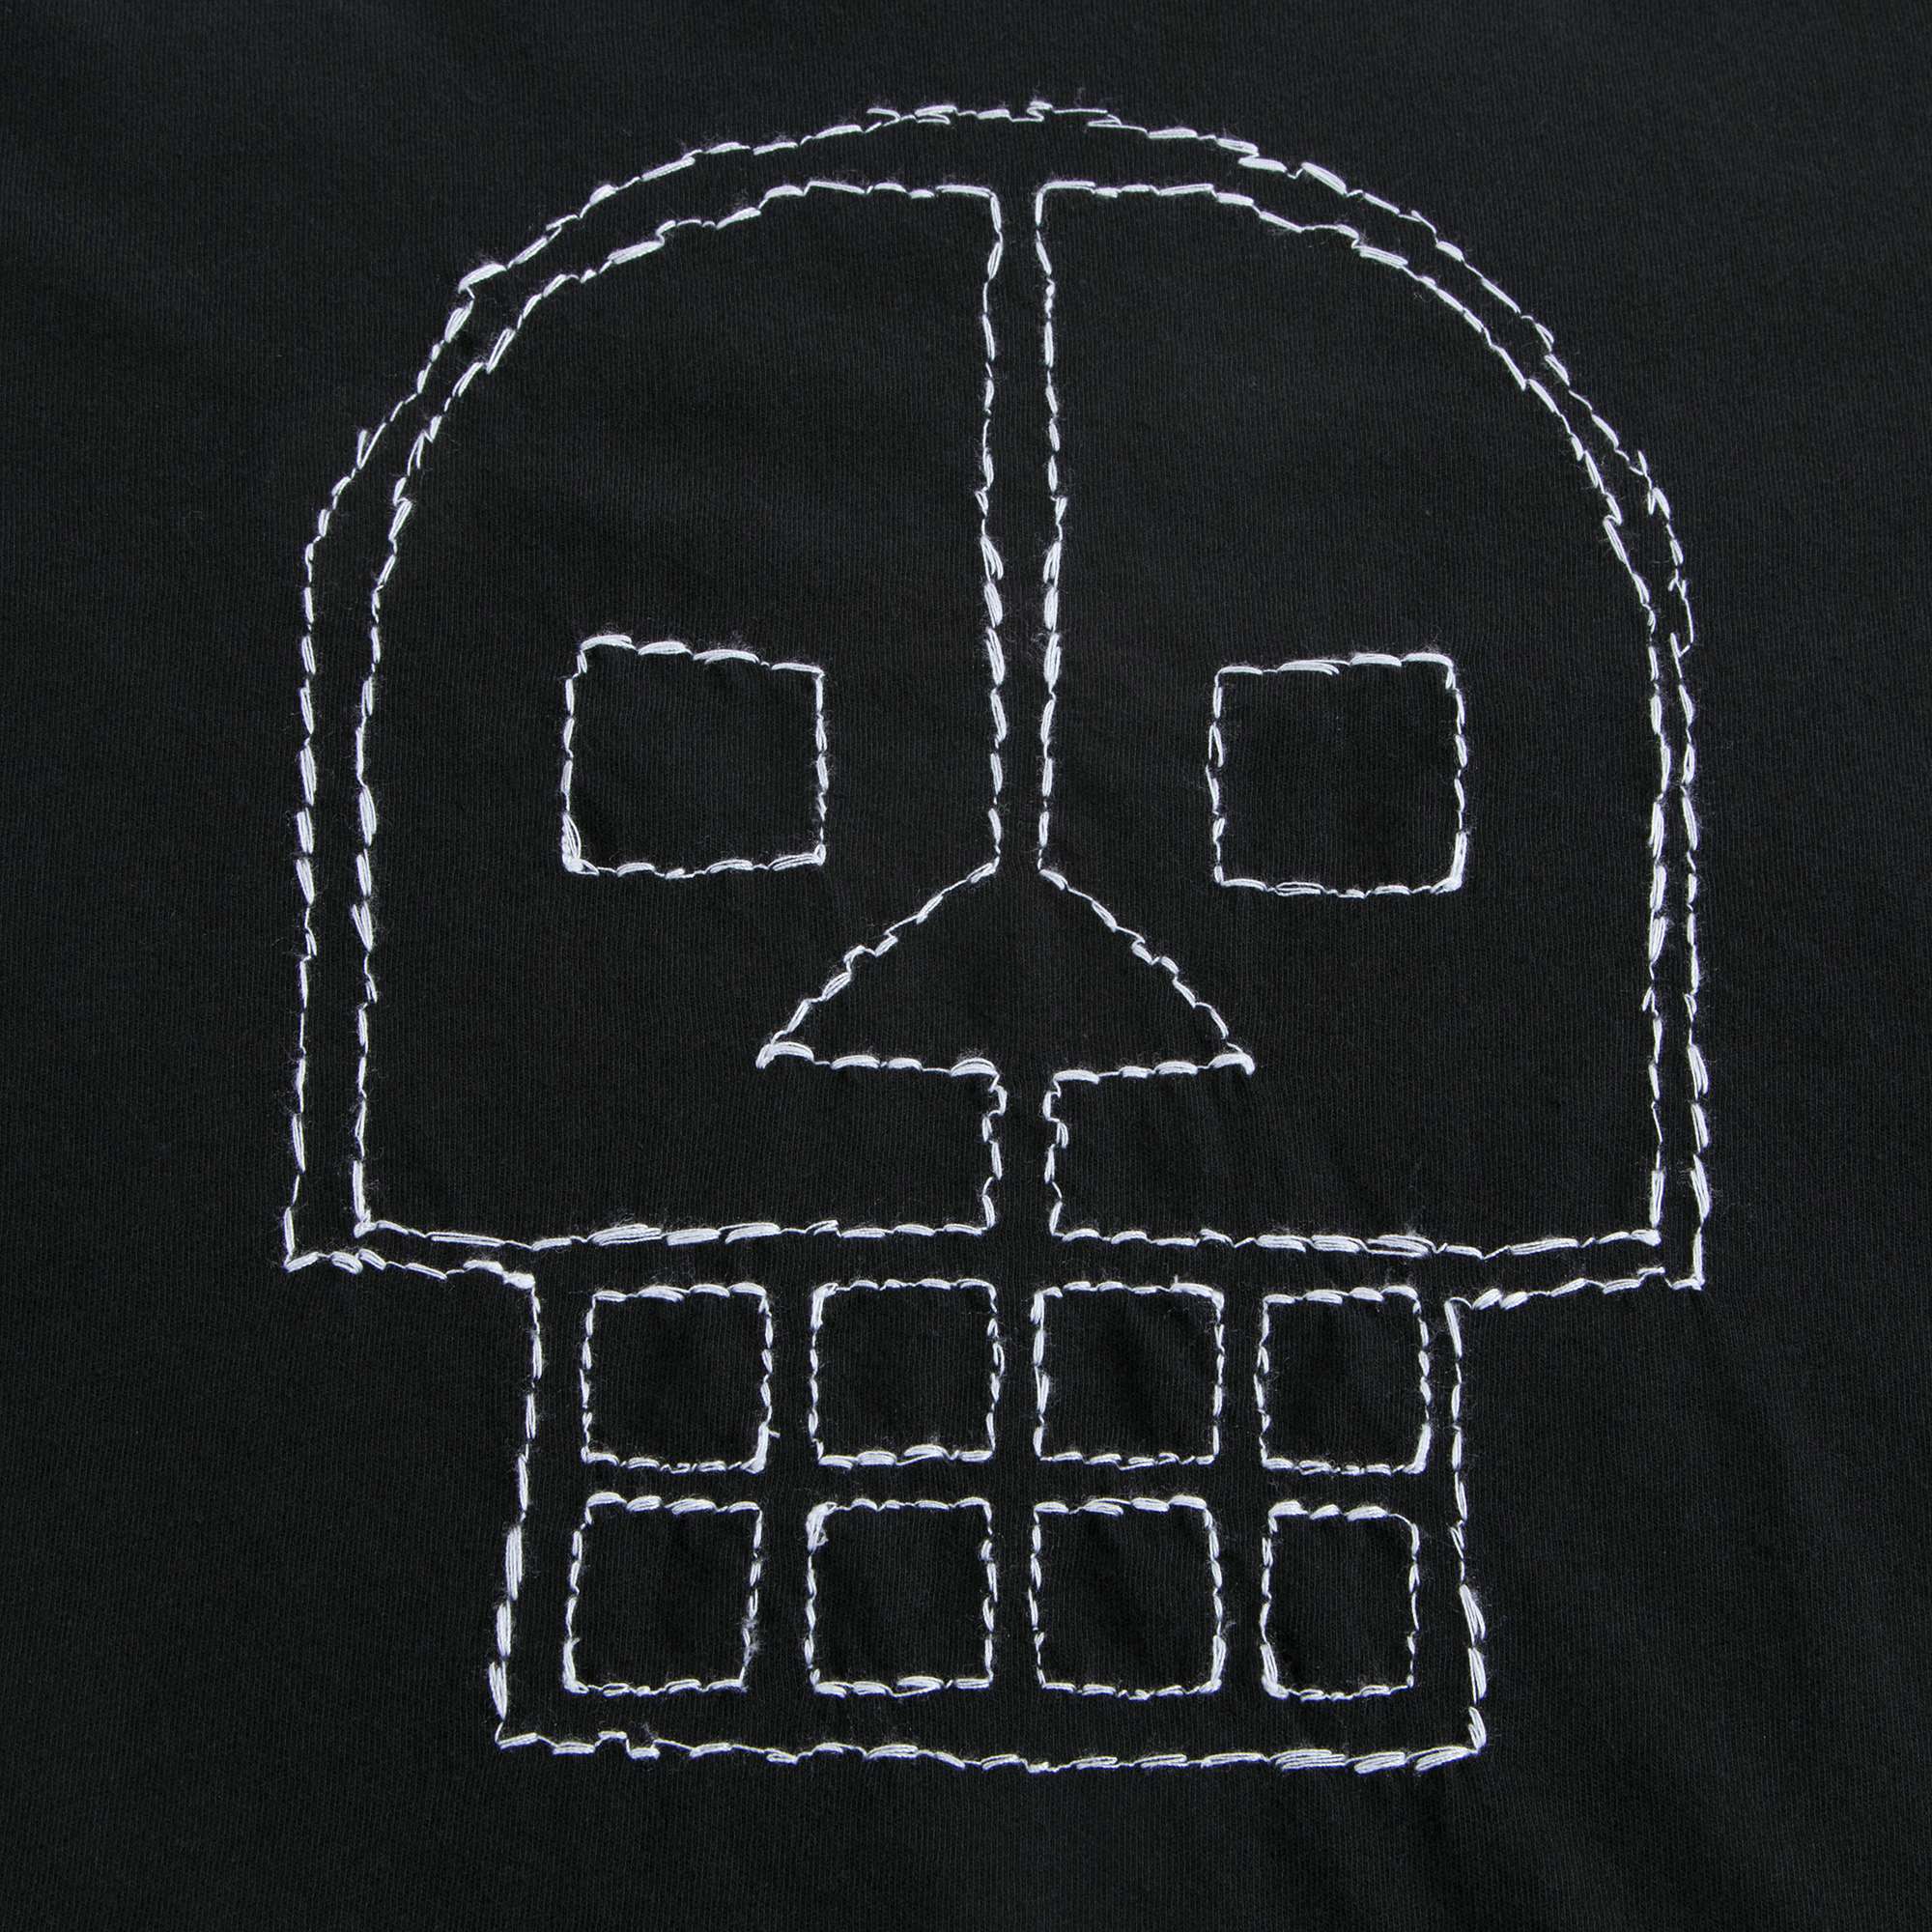 Boys Black Cotton Embroidered Skull T-shirt